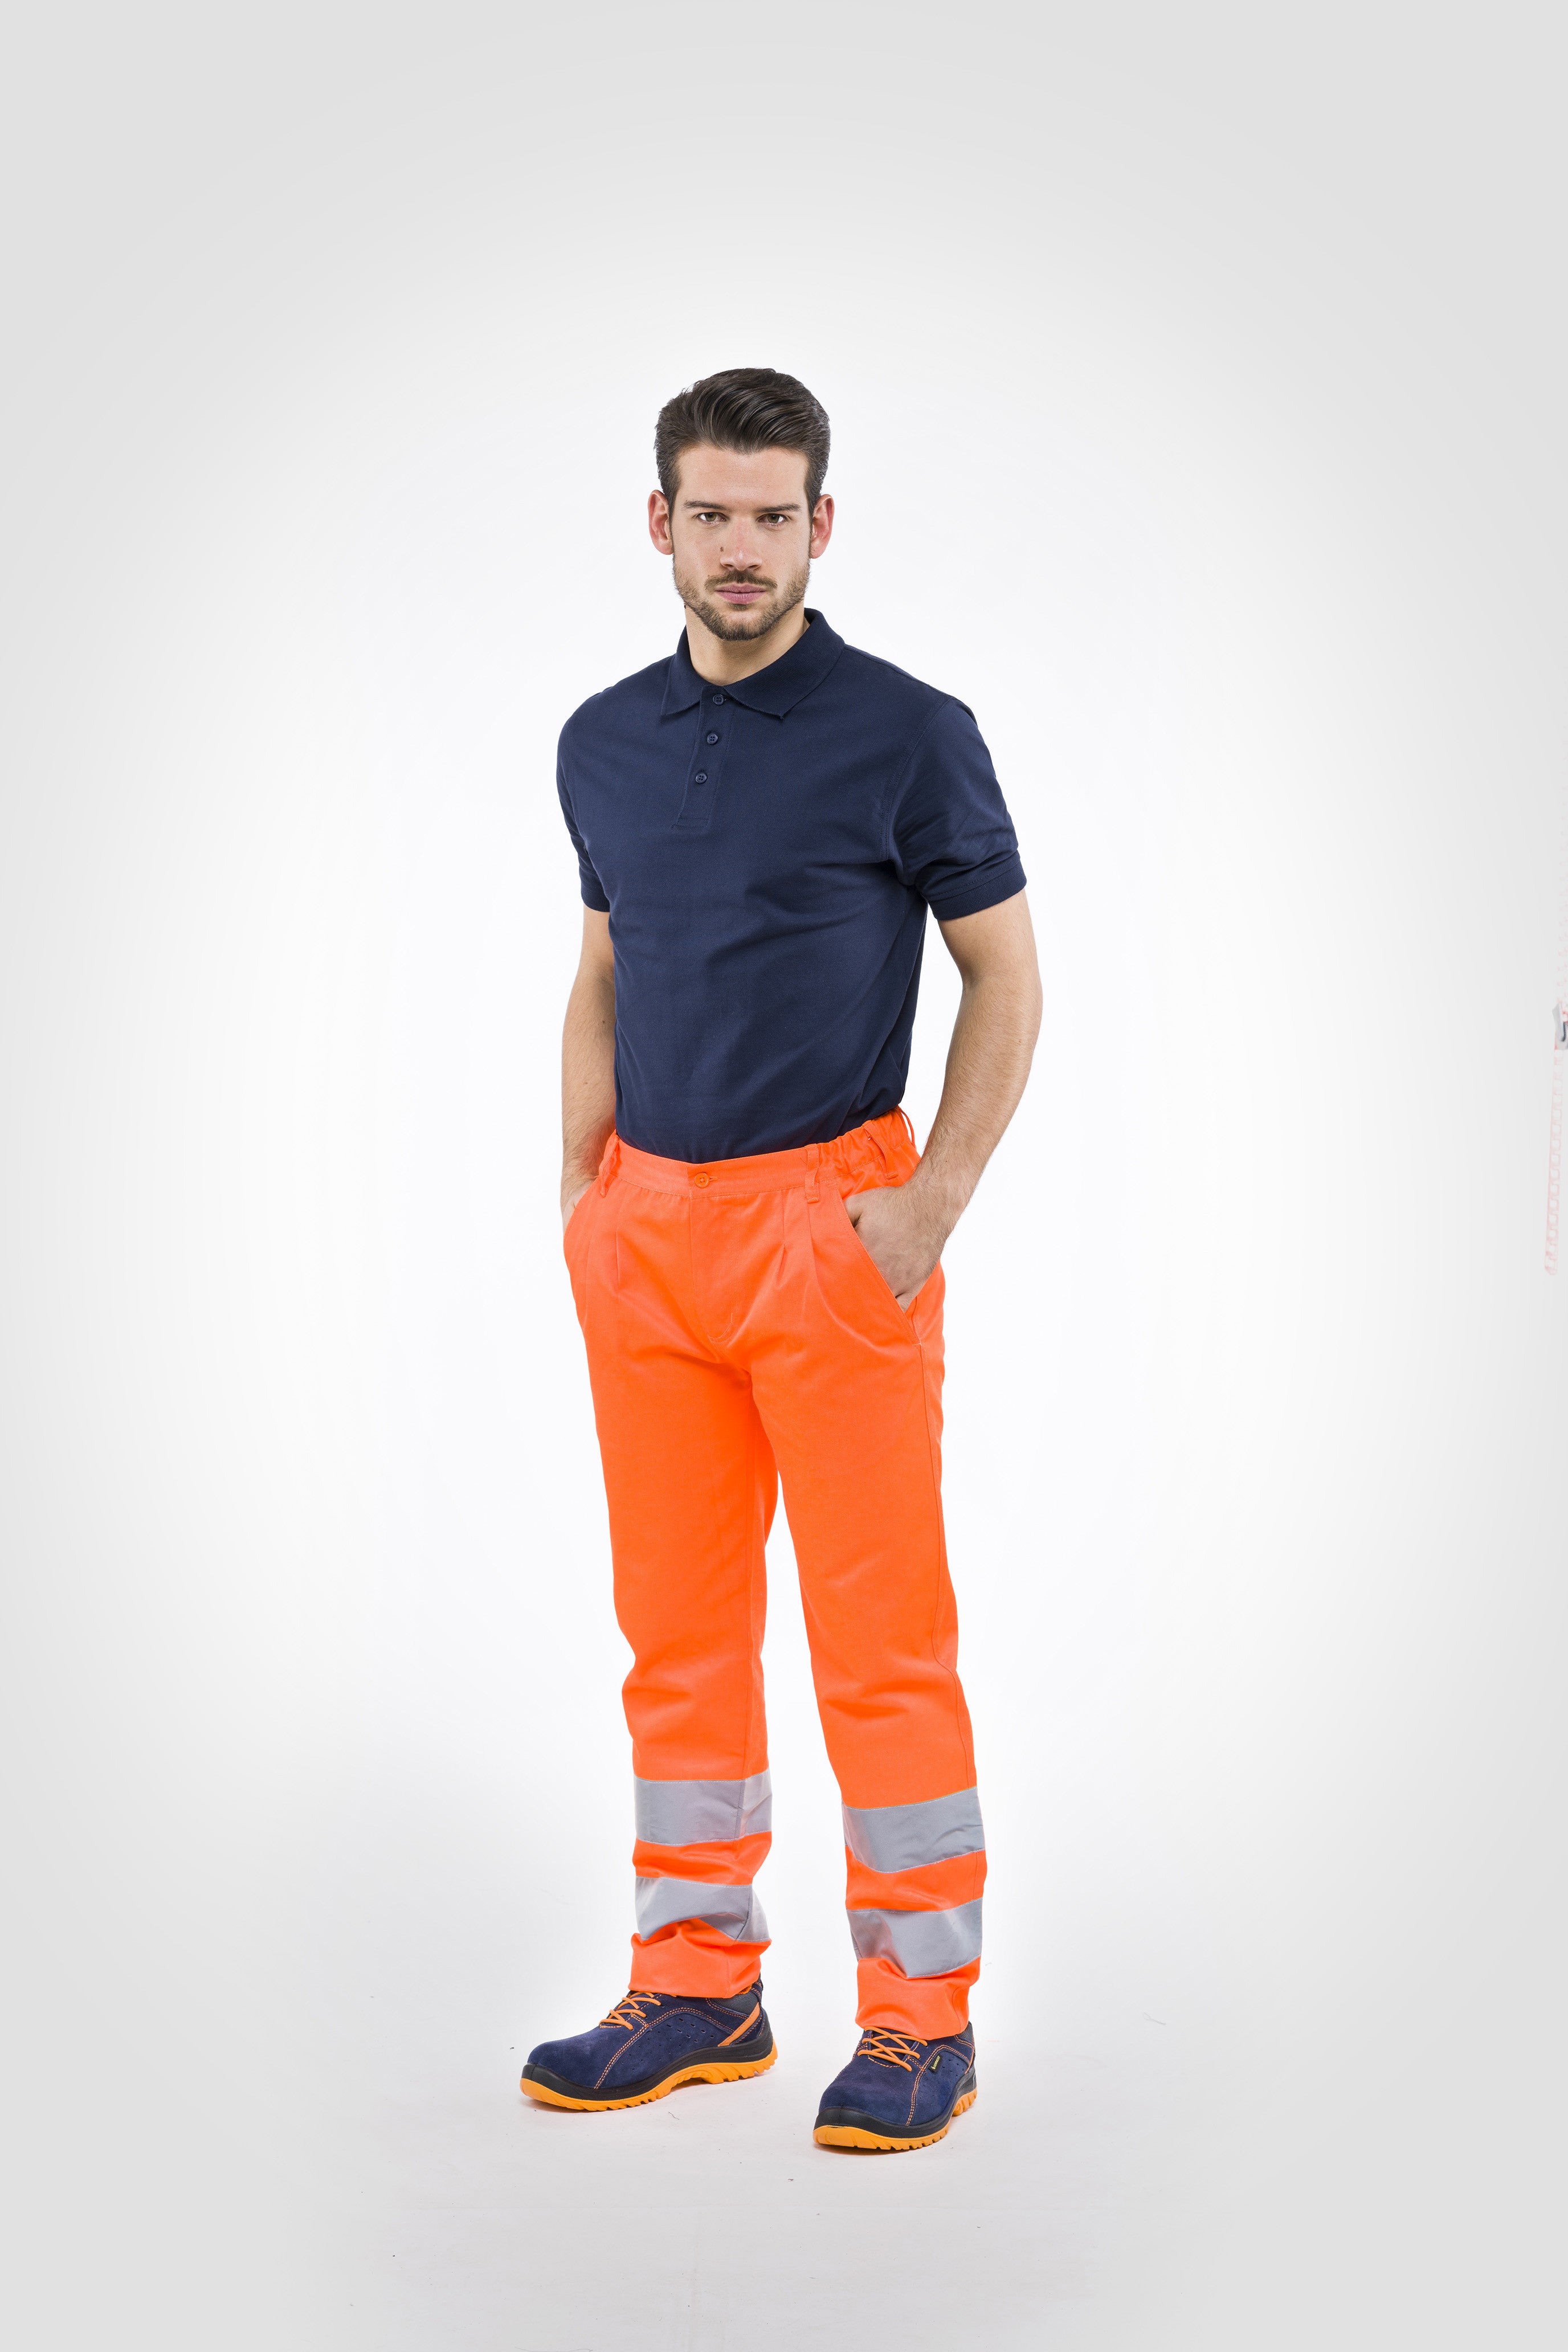 Pantalone alta visibilit arancio tg. xxl